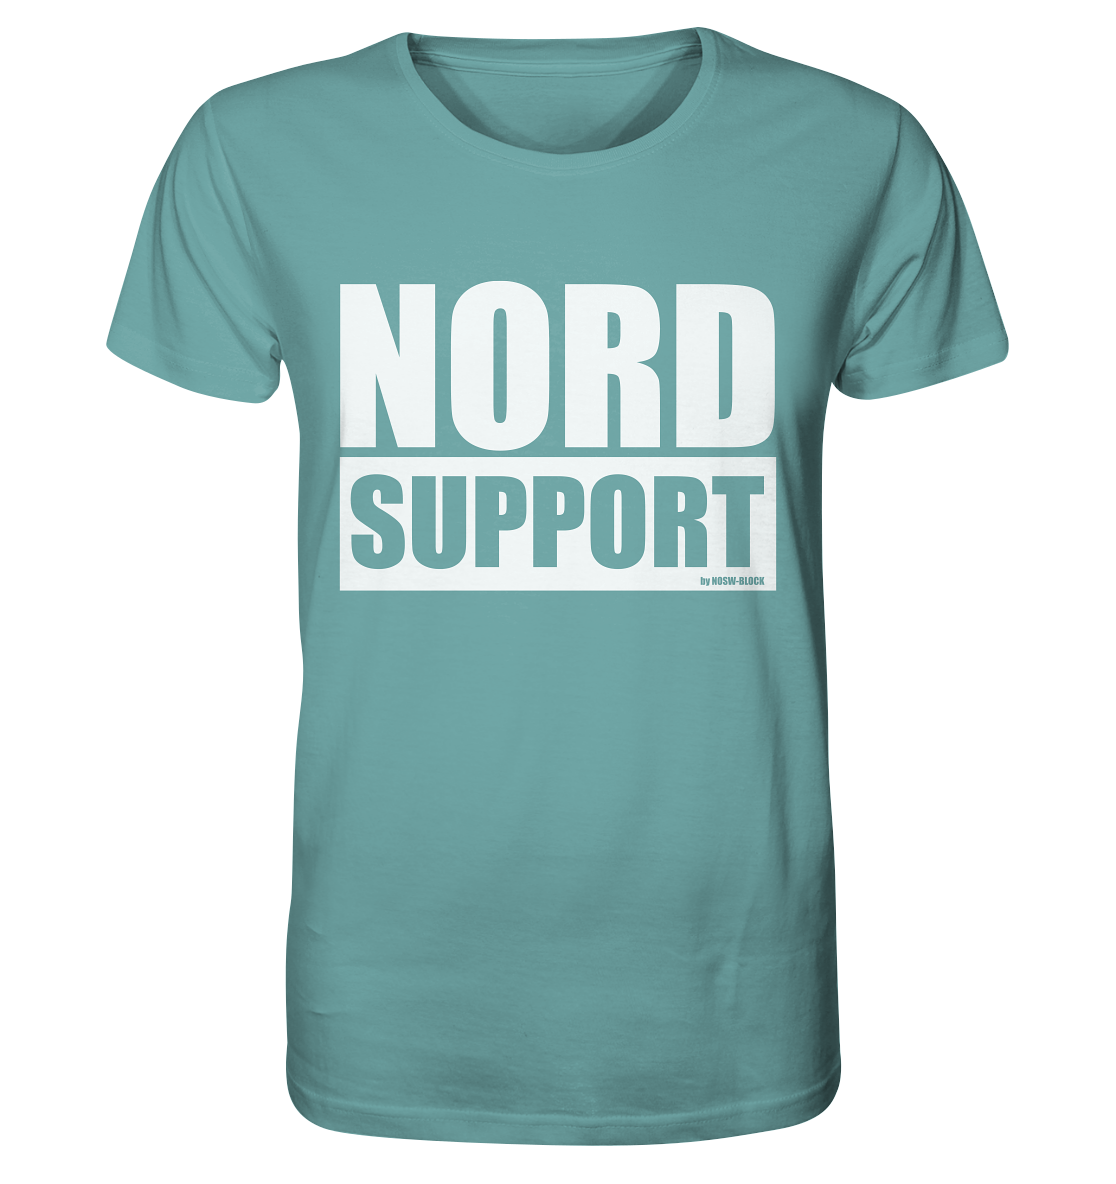 N.O.S.W. BLOCK Fanblock Shirt "NORD SUPPORT" Männer Organic Rundhals T-Shirt citadel blue